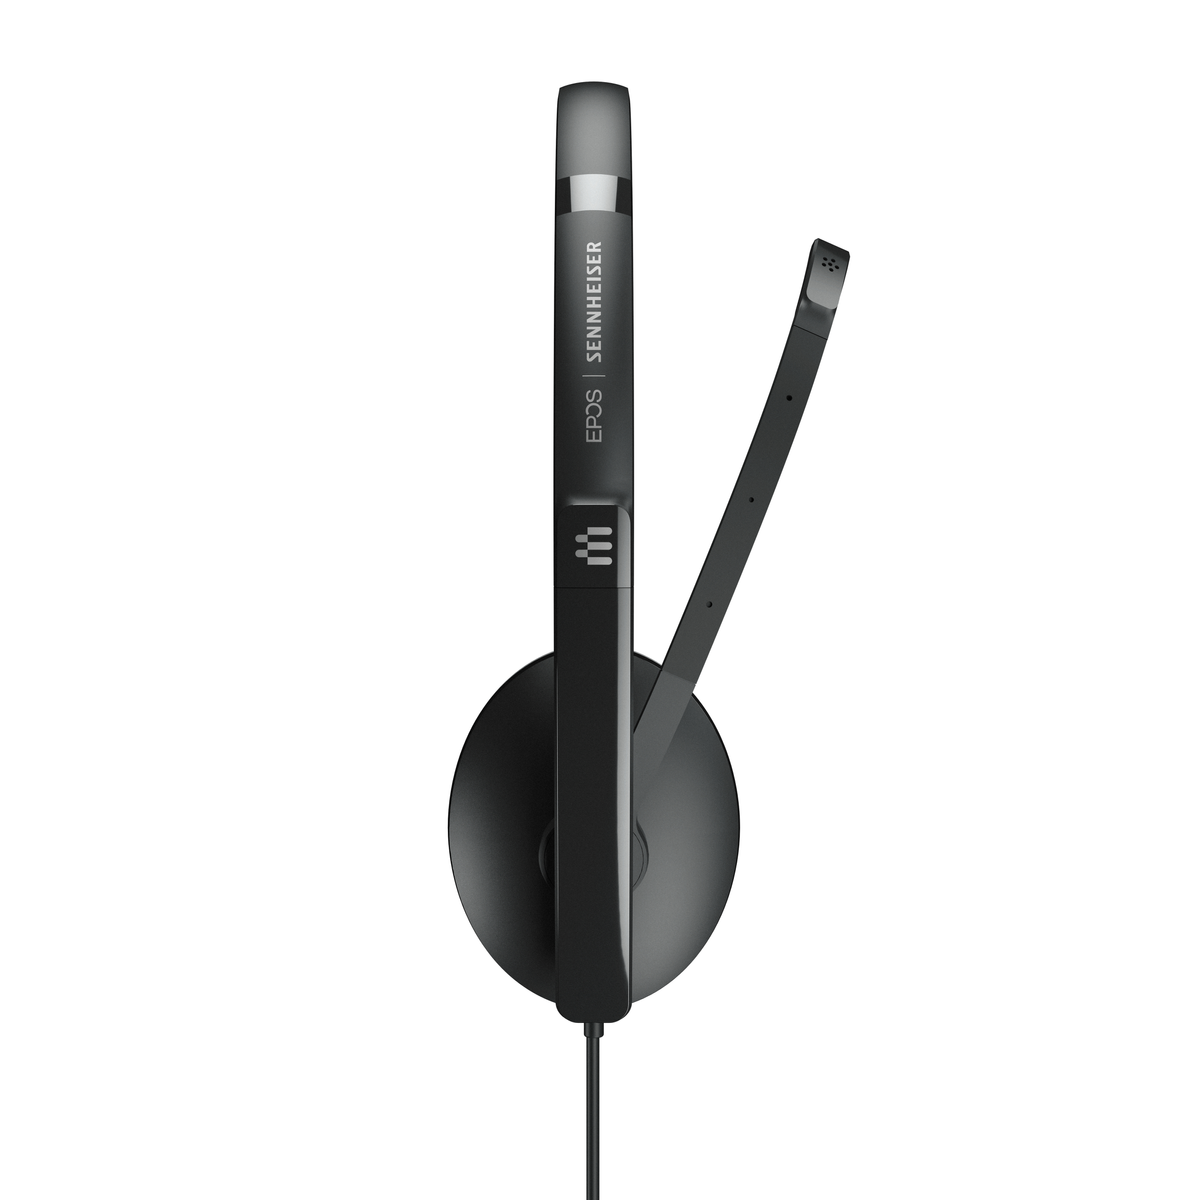 165T ADAPT II, EPOS Schwarz USB-C On-ear Headset